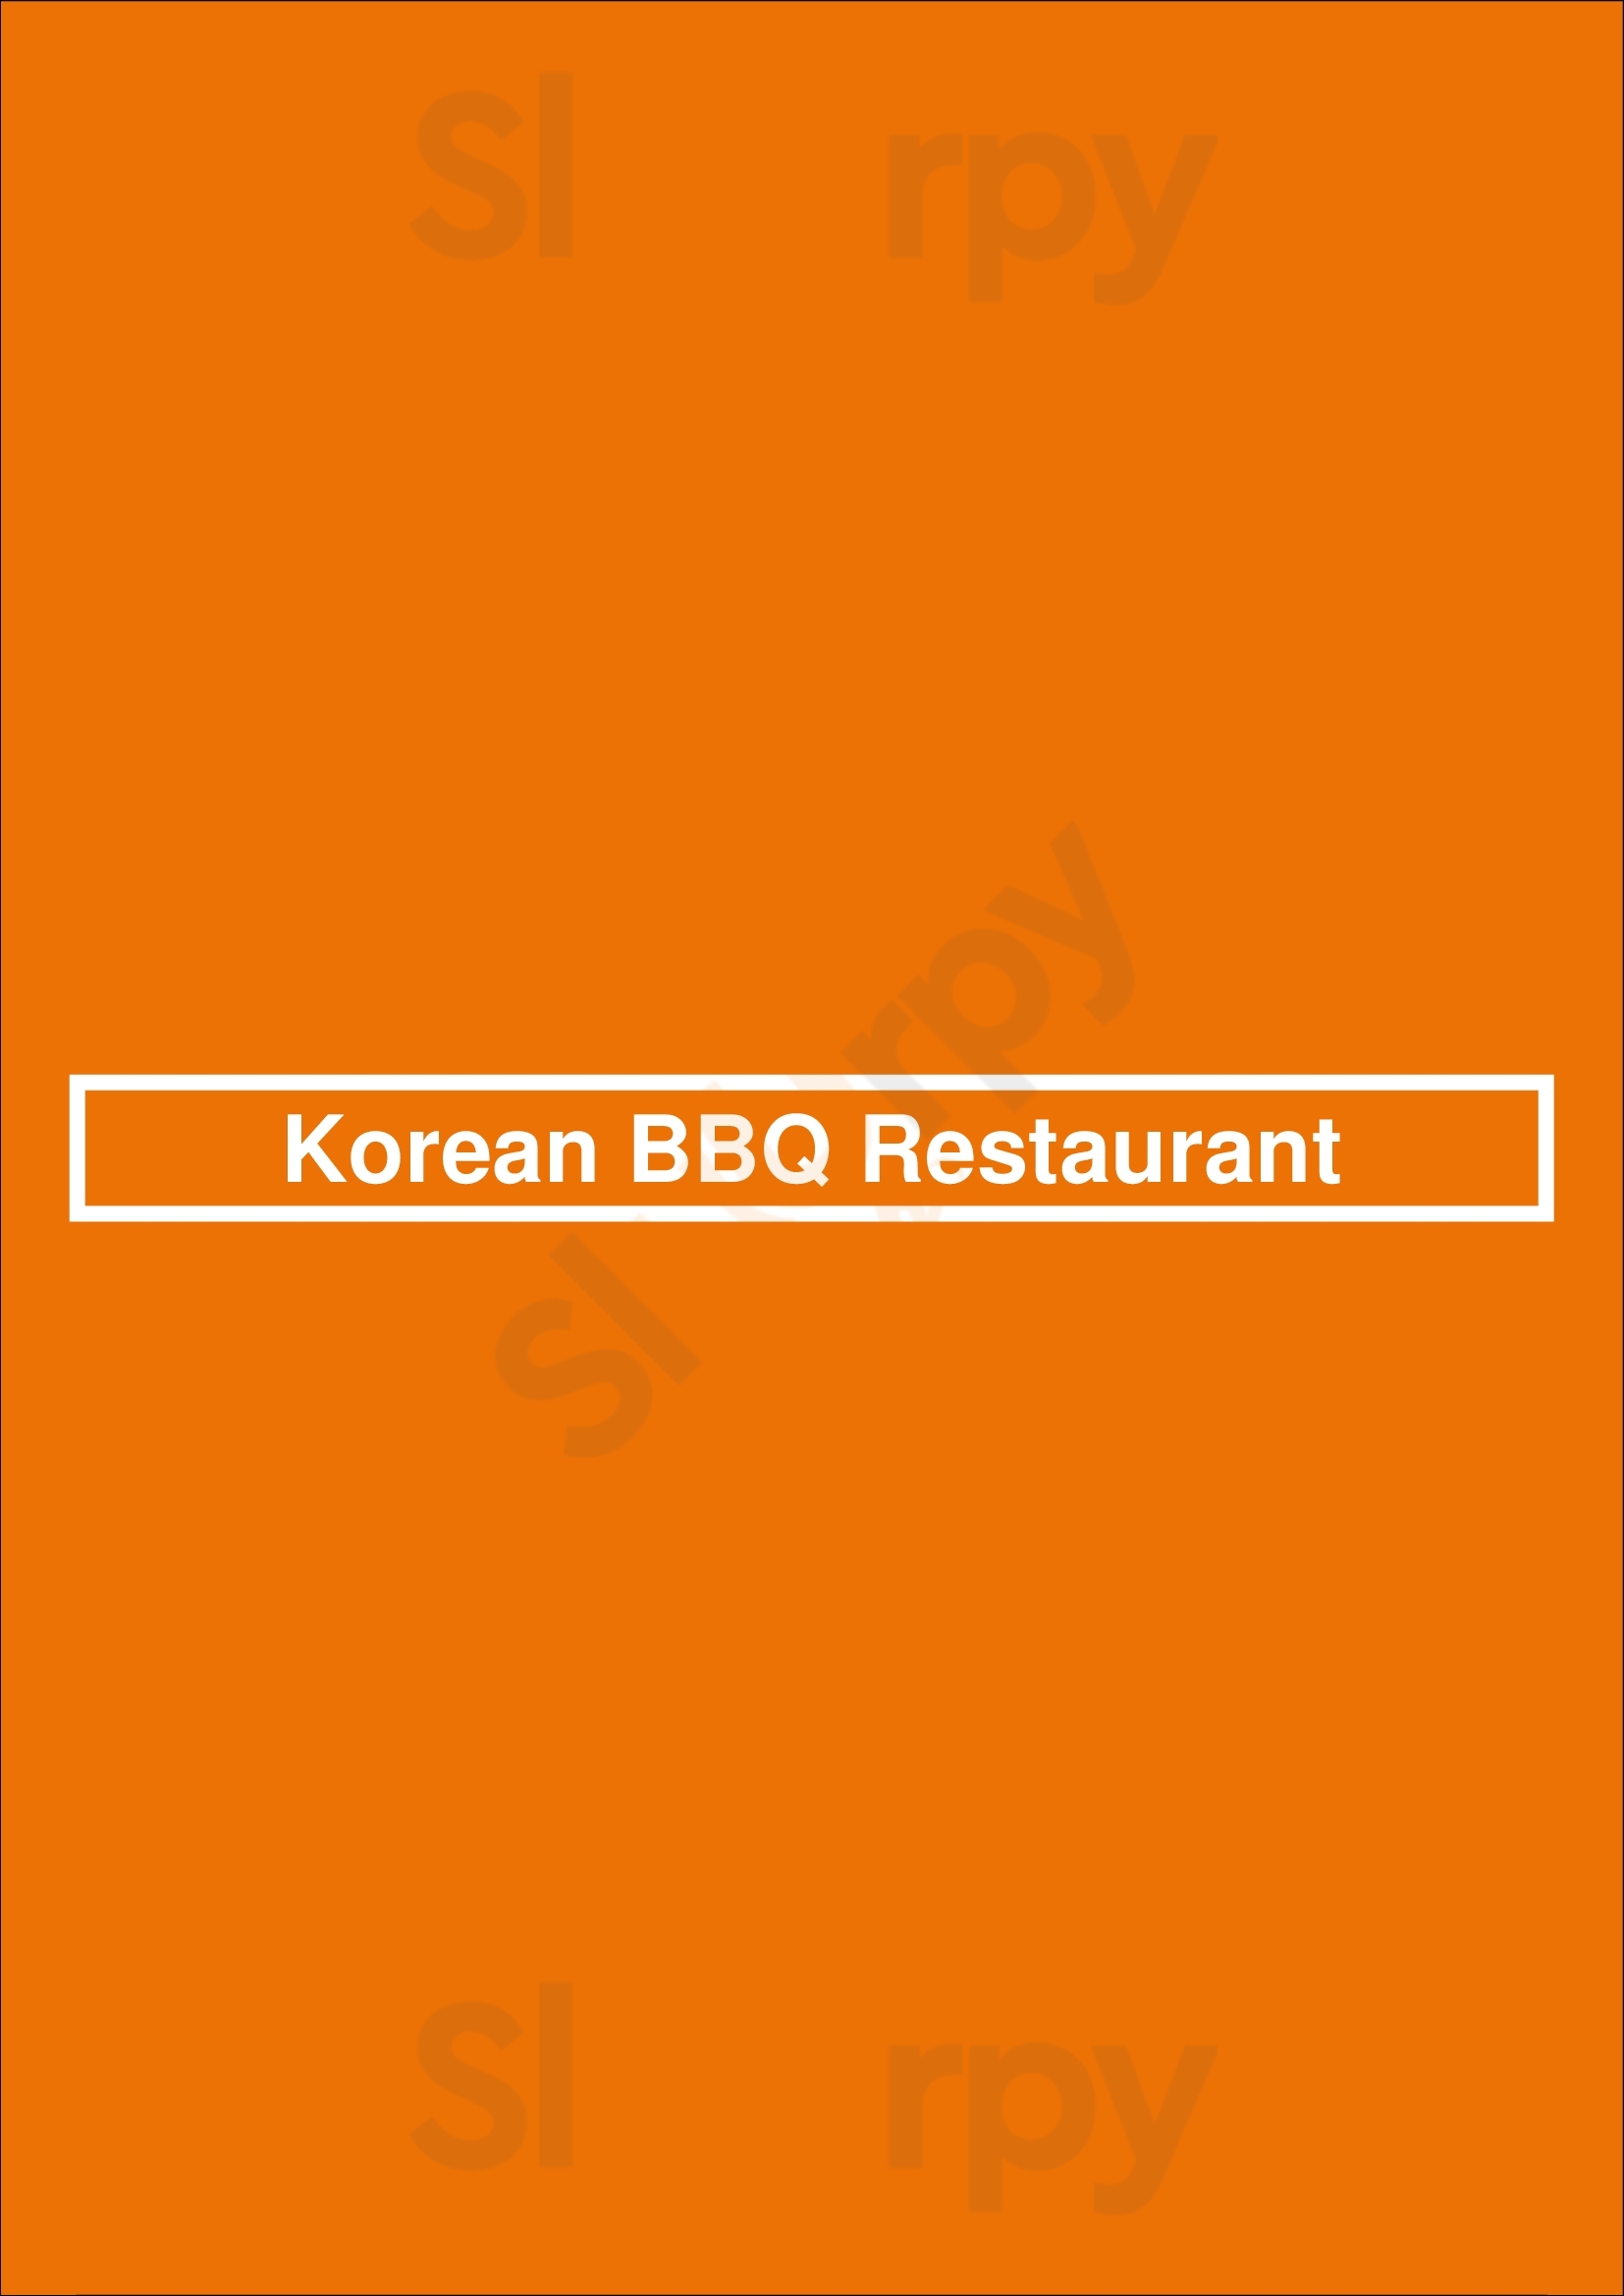 Korean Bbq Restaurant Kitchener Menu - 1